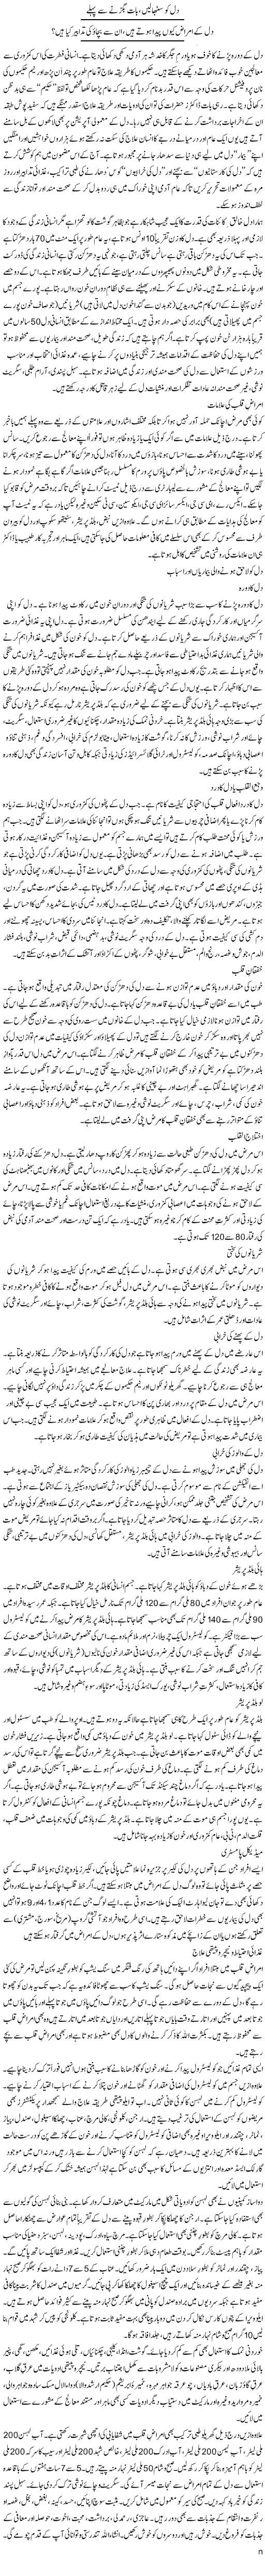 Heart Disease, Causes, Preventions, Symptoms & Treatment (Urdu-English)